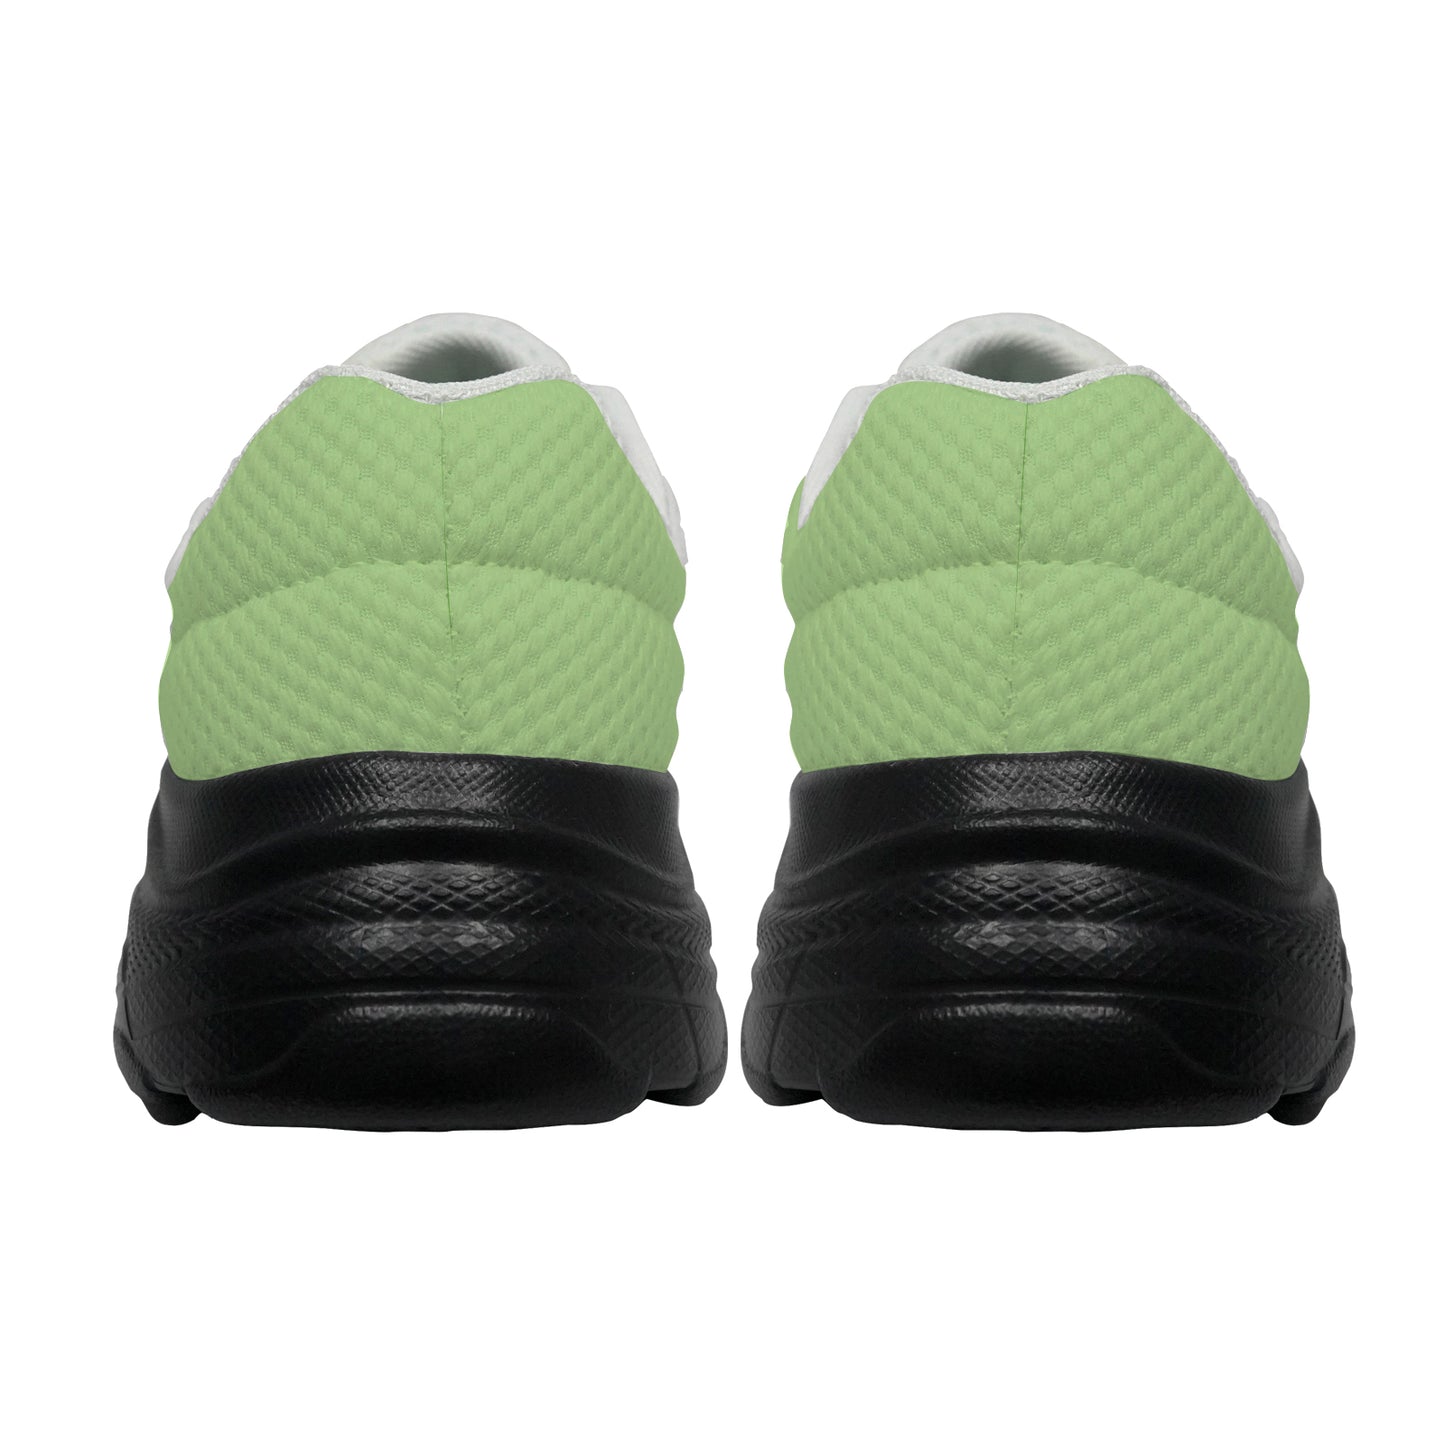 Lyra Men's Chunky Shoes - Classic Green